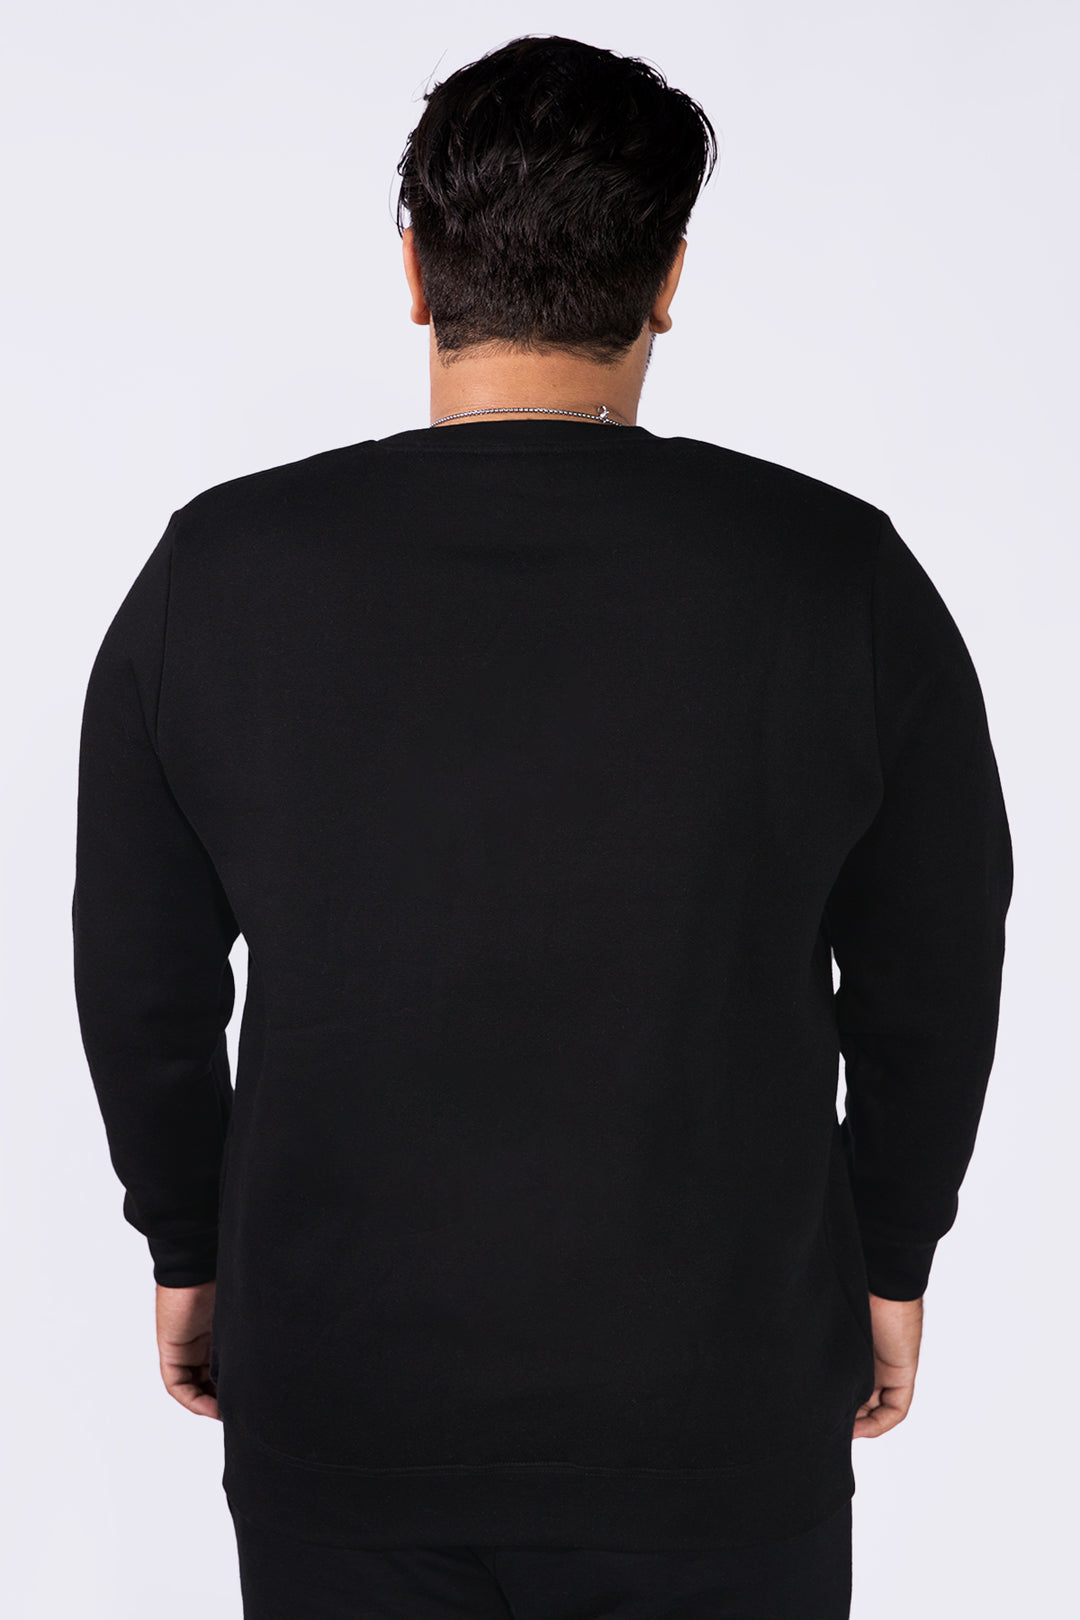 Rare Embroidered Black Sweatshirt Online in Pakistan